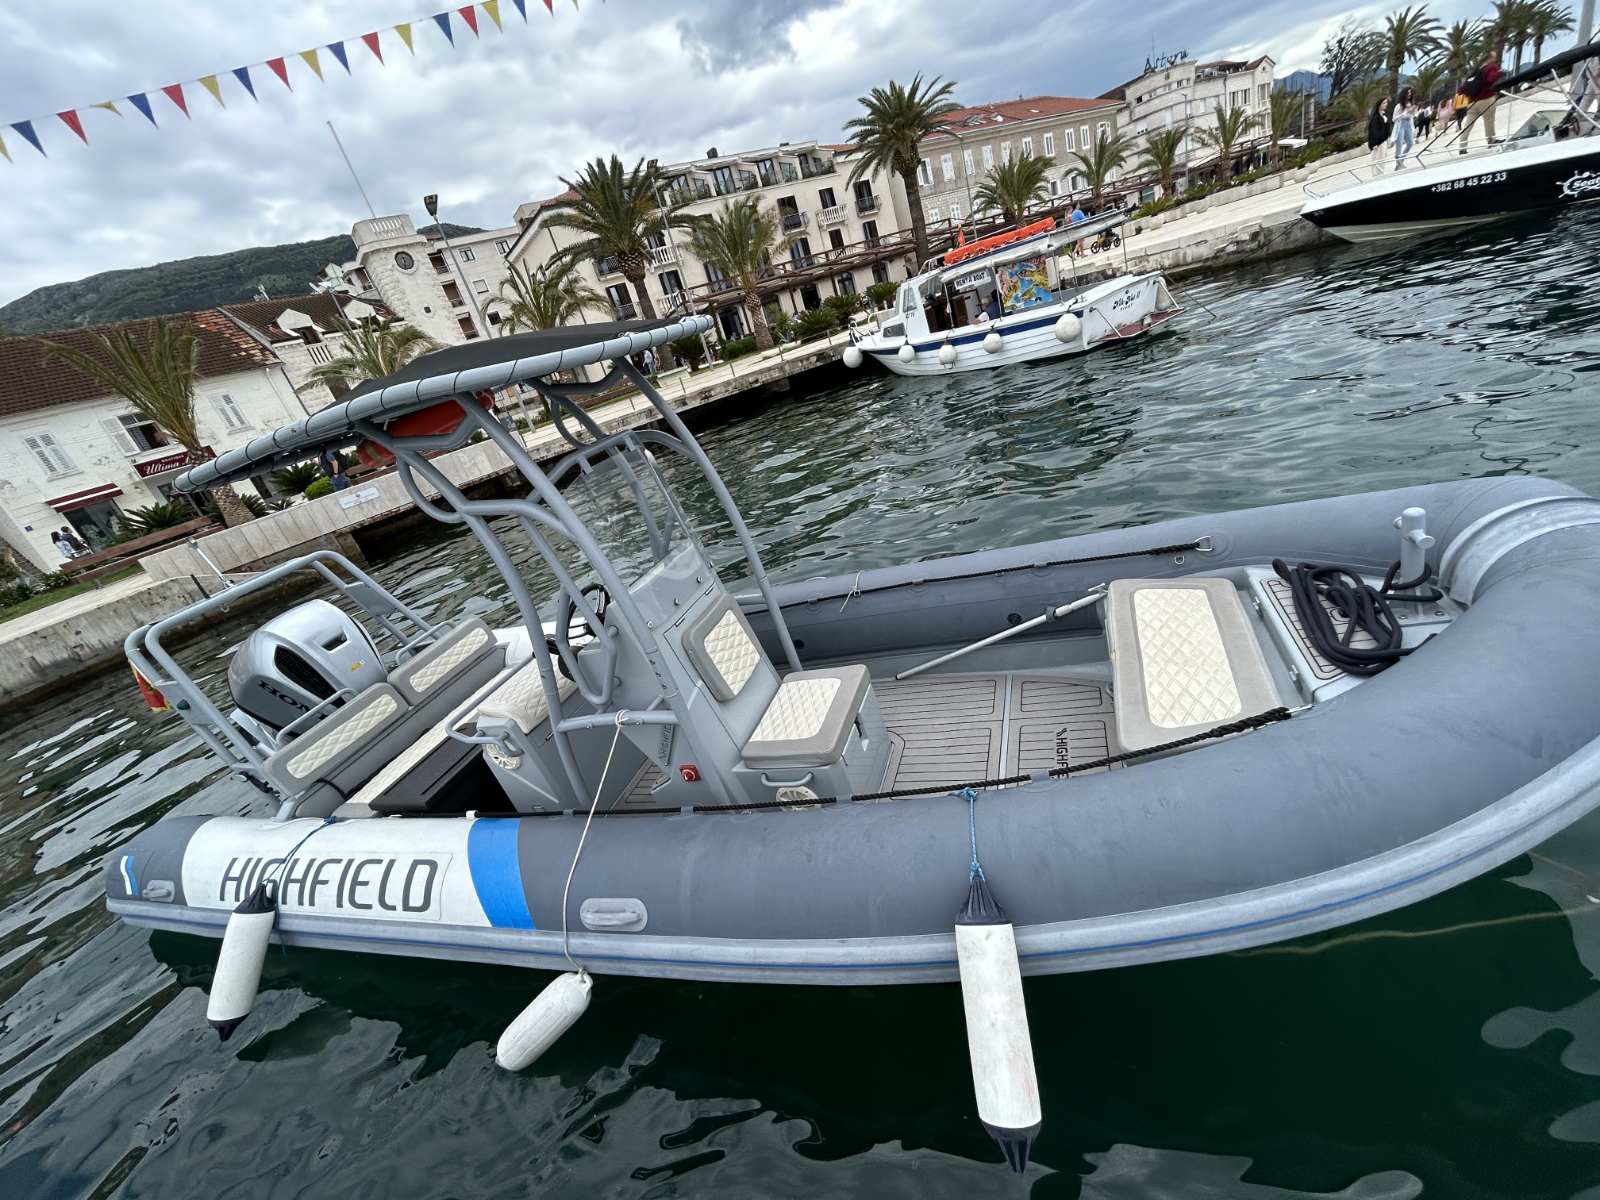 Highfield Patrol 660 - Motor Boat Charter Montenegro & Boat hire in Montenegro Bay of Kotor Tivat Porto Montenegro 4